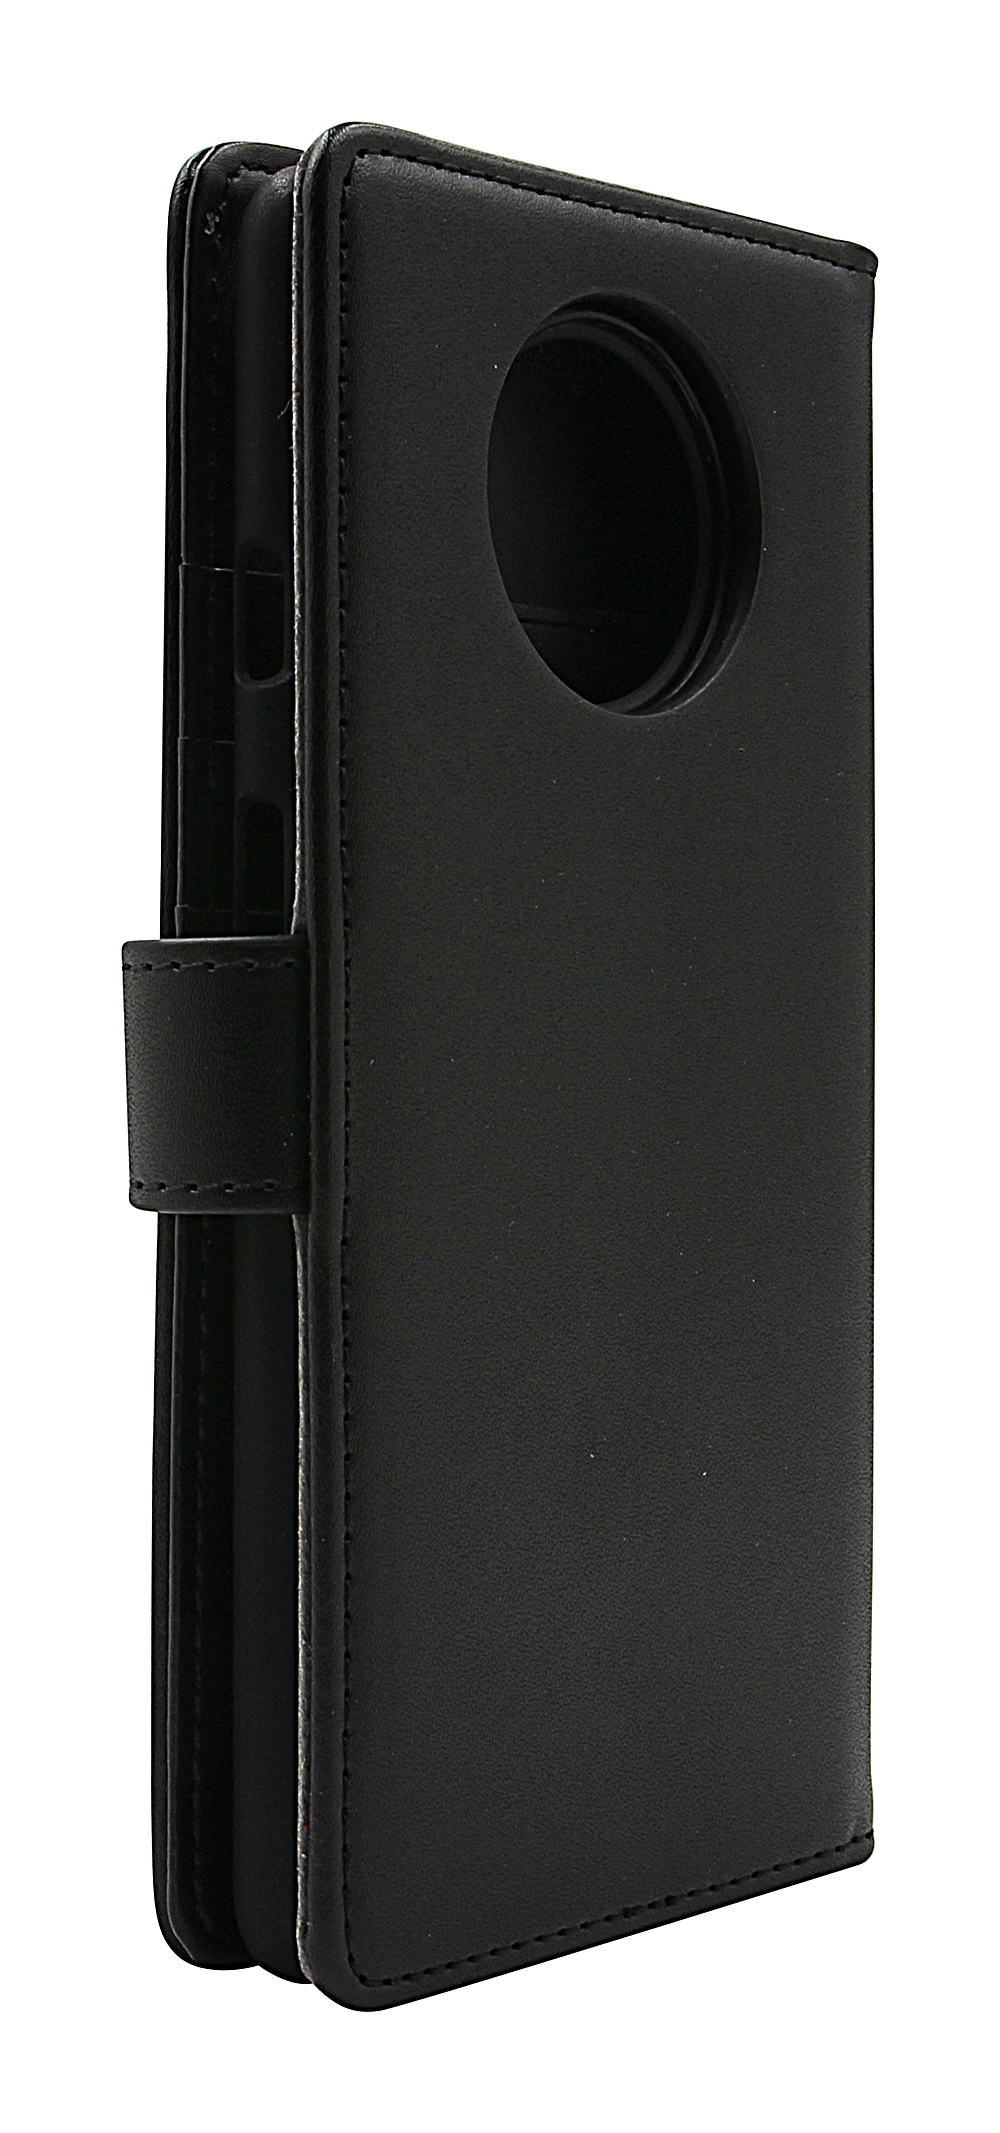 Skimblocker Magnet Wallet OnePlus 7T